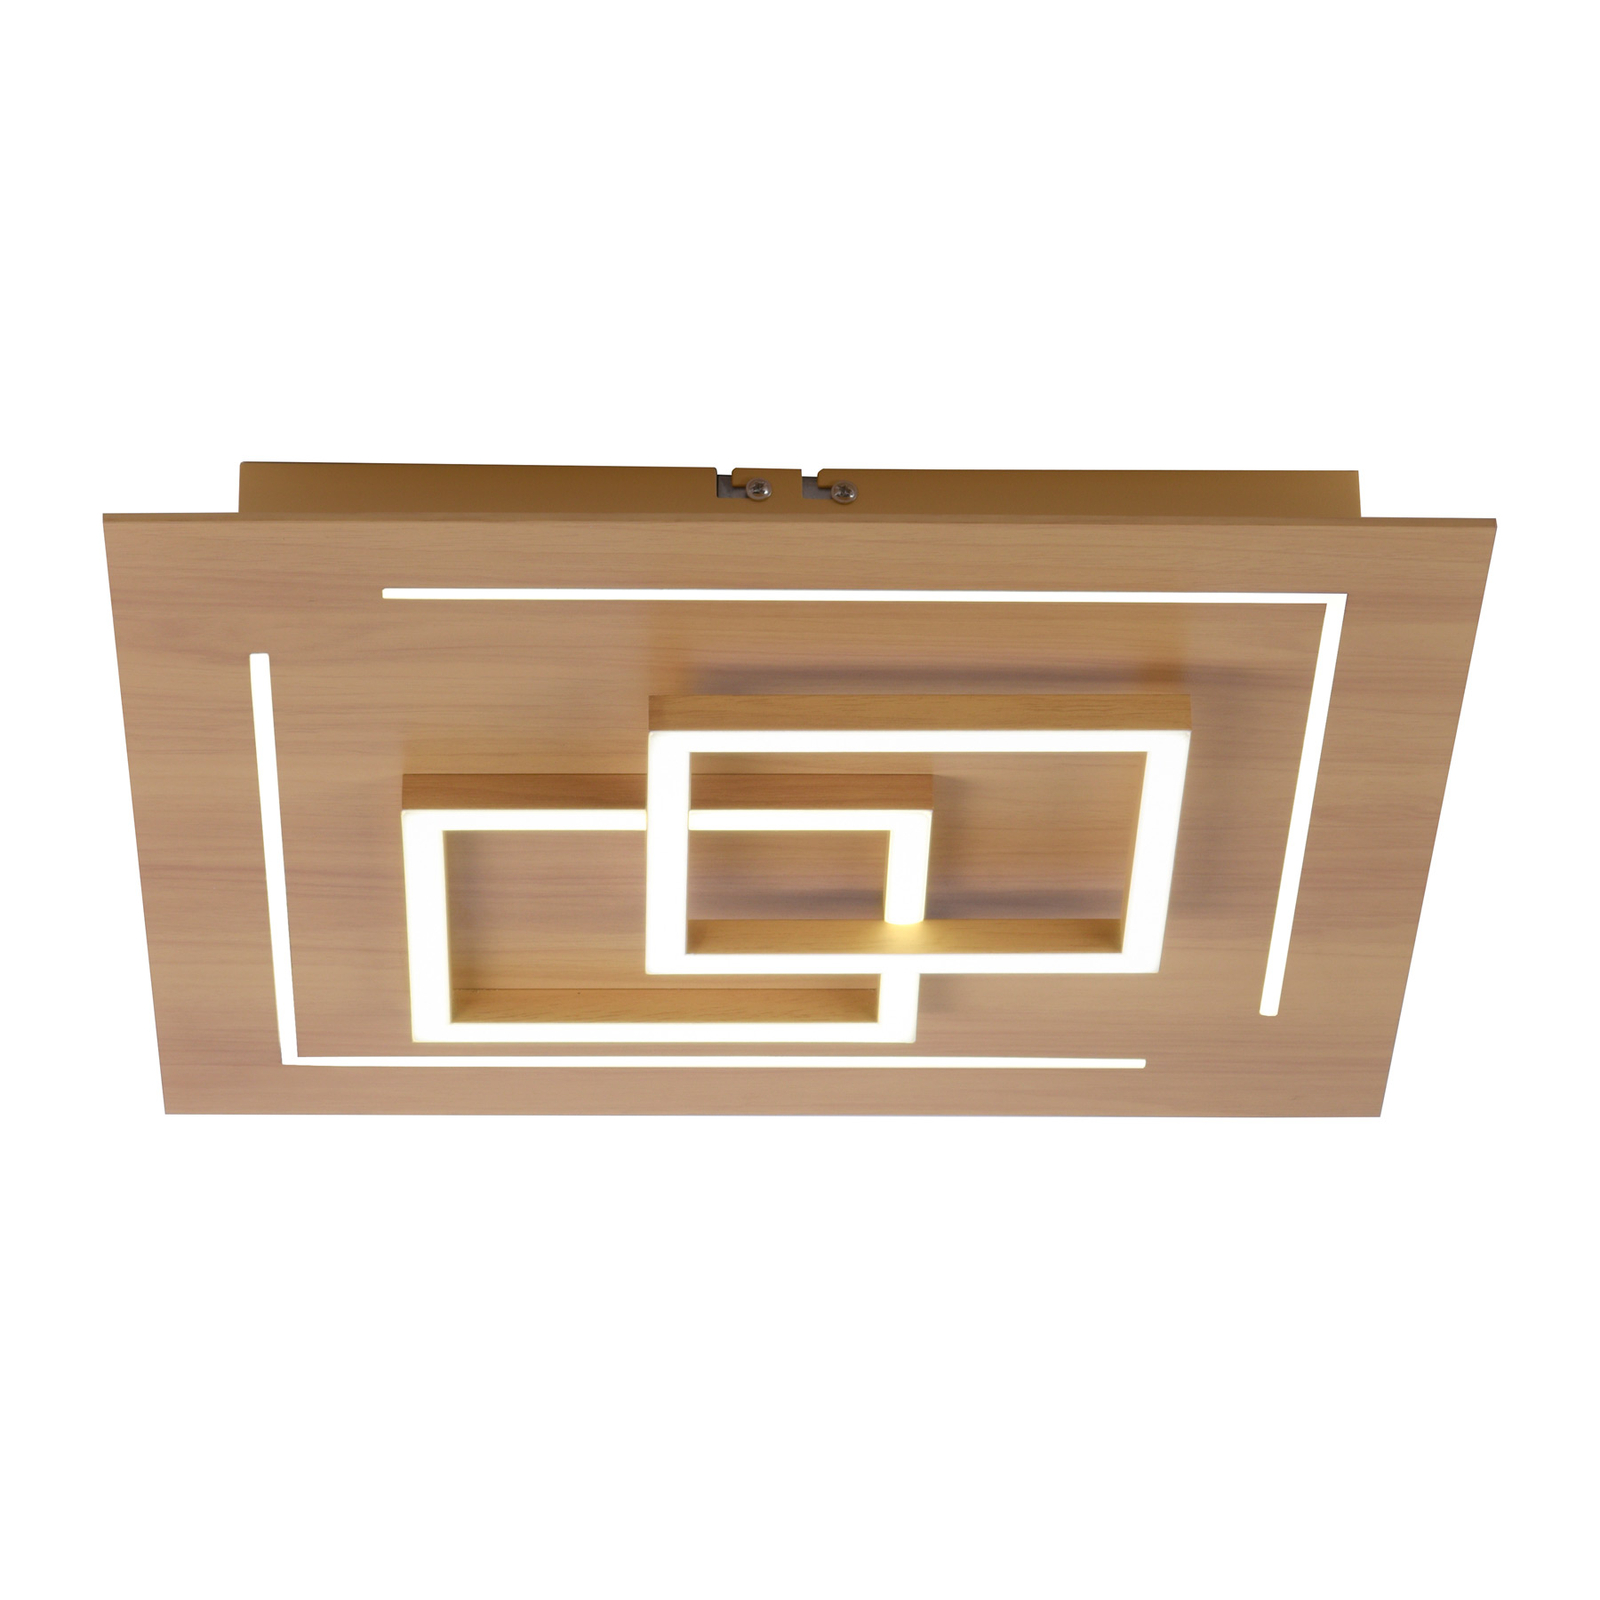 Paul Neuhaus Q-LINEA LED plafond houtdecor 40cm